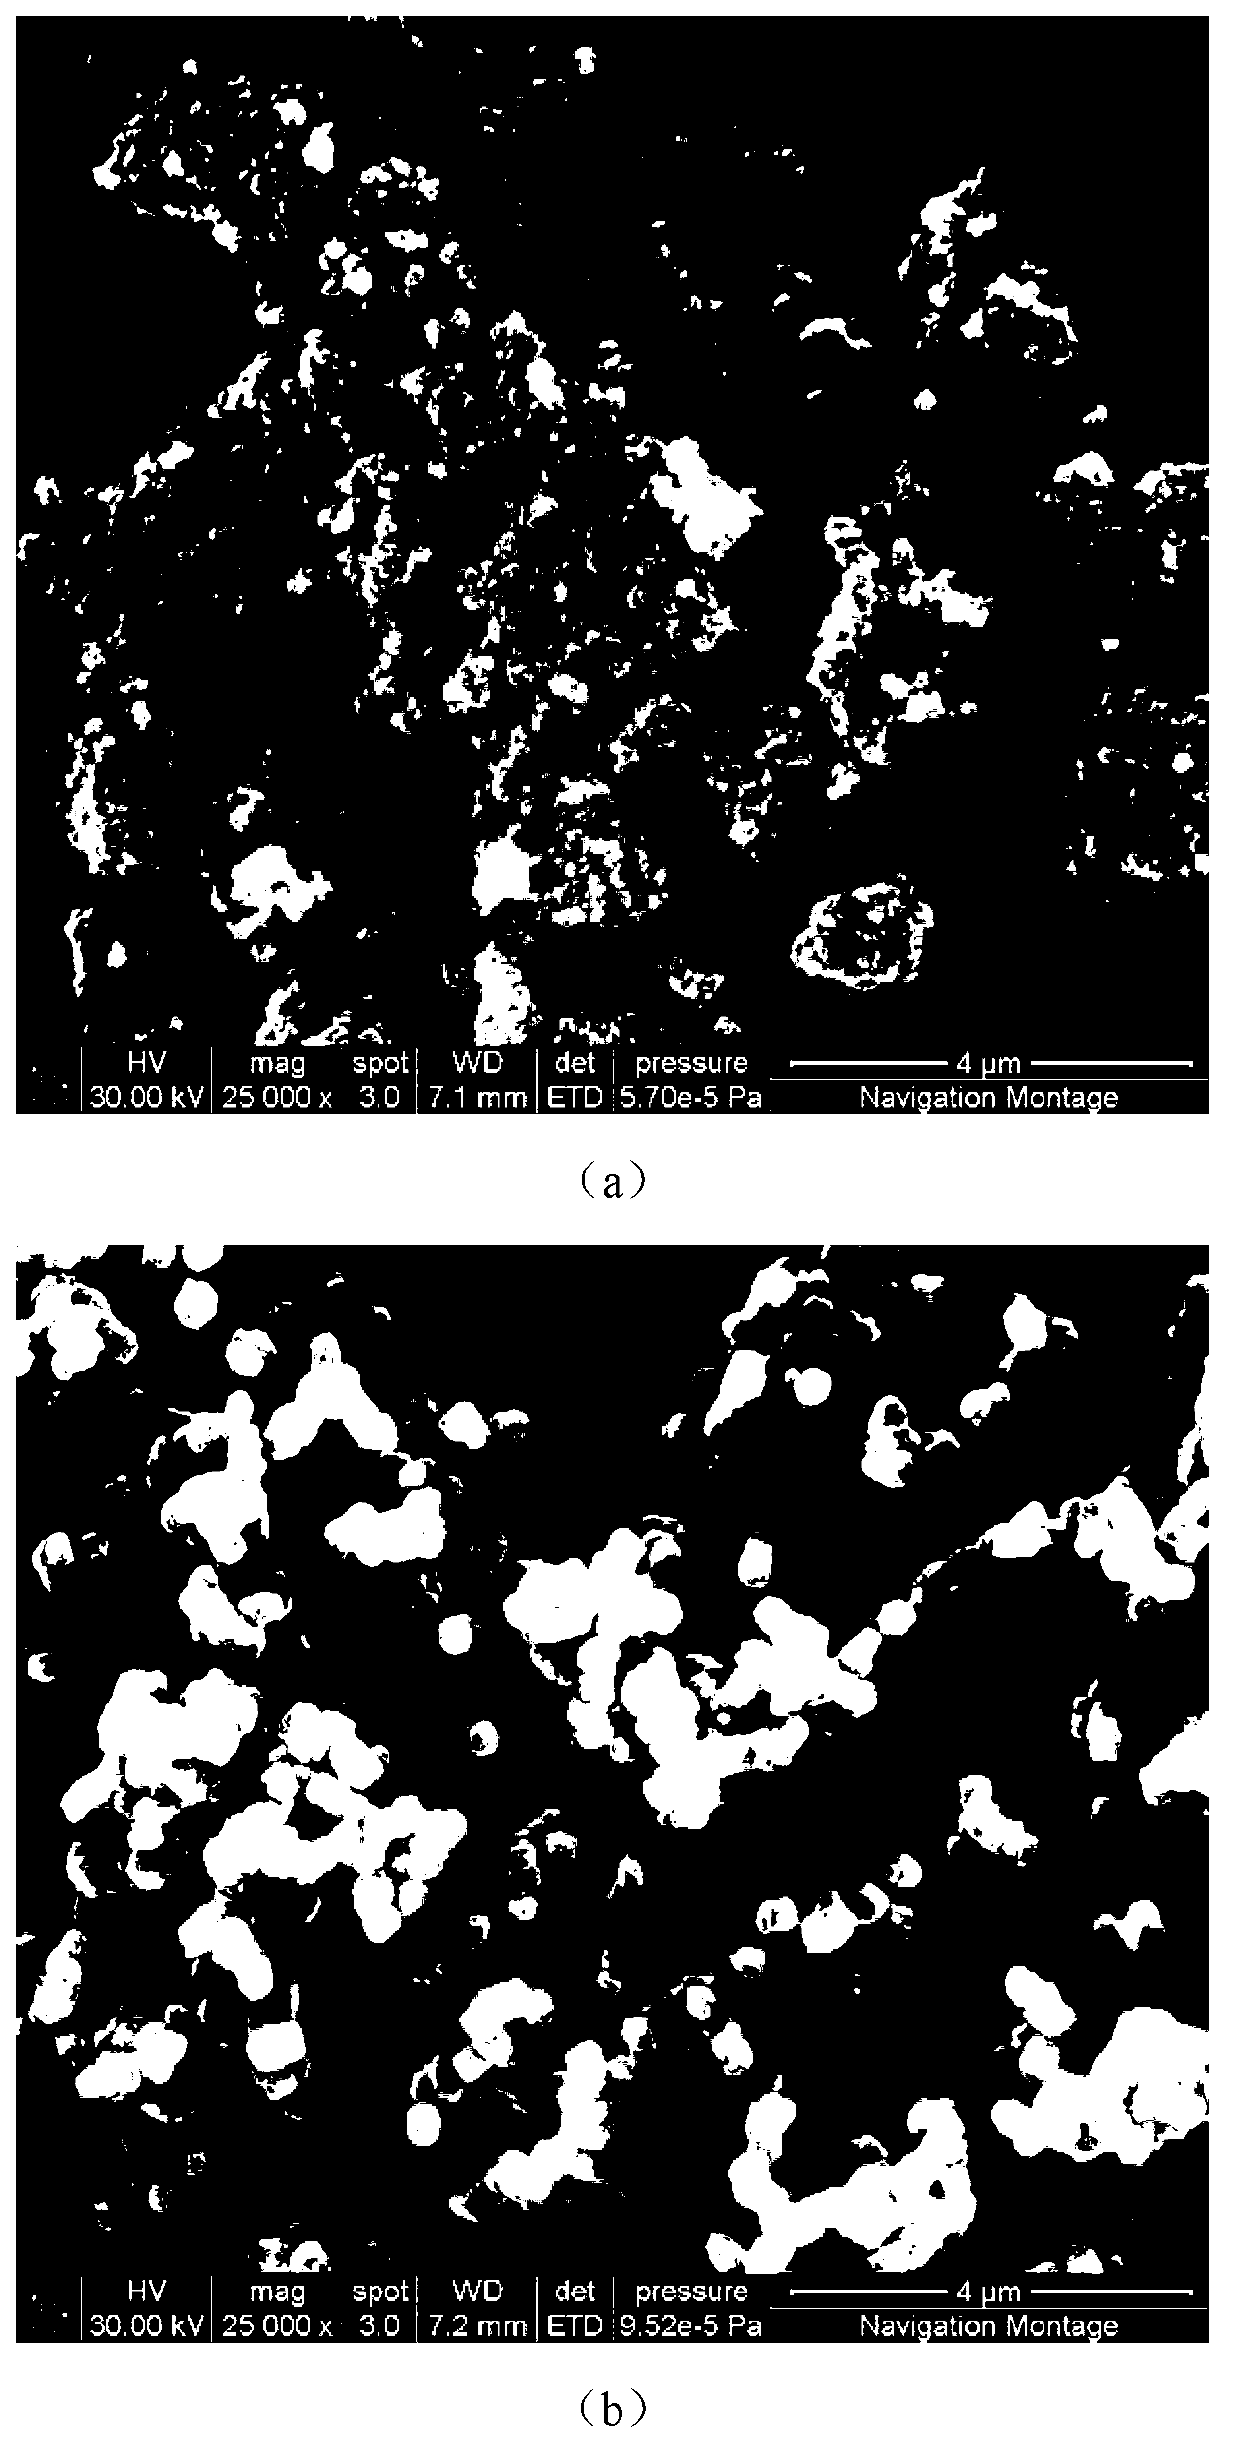 Solid-phase sintering synthetic method of nano lithium iron phosphate (LiFePO4)